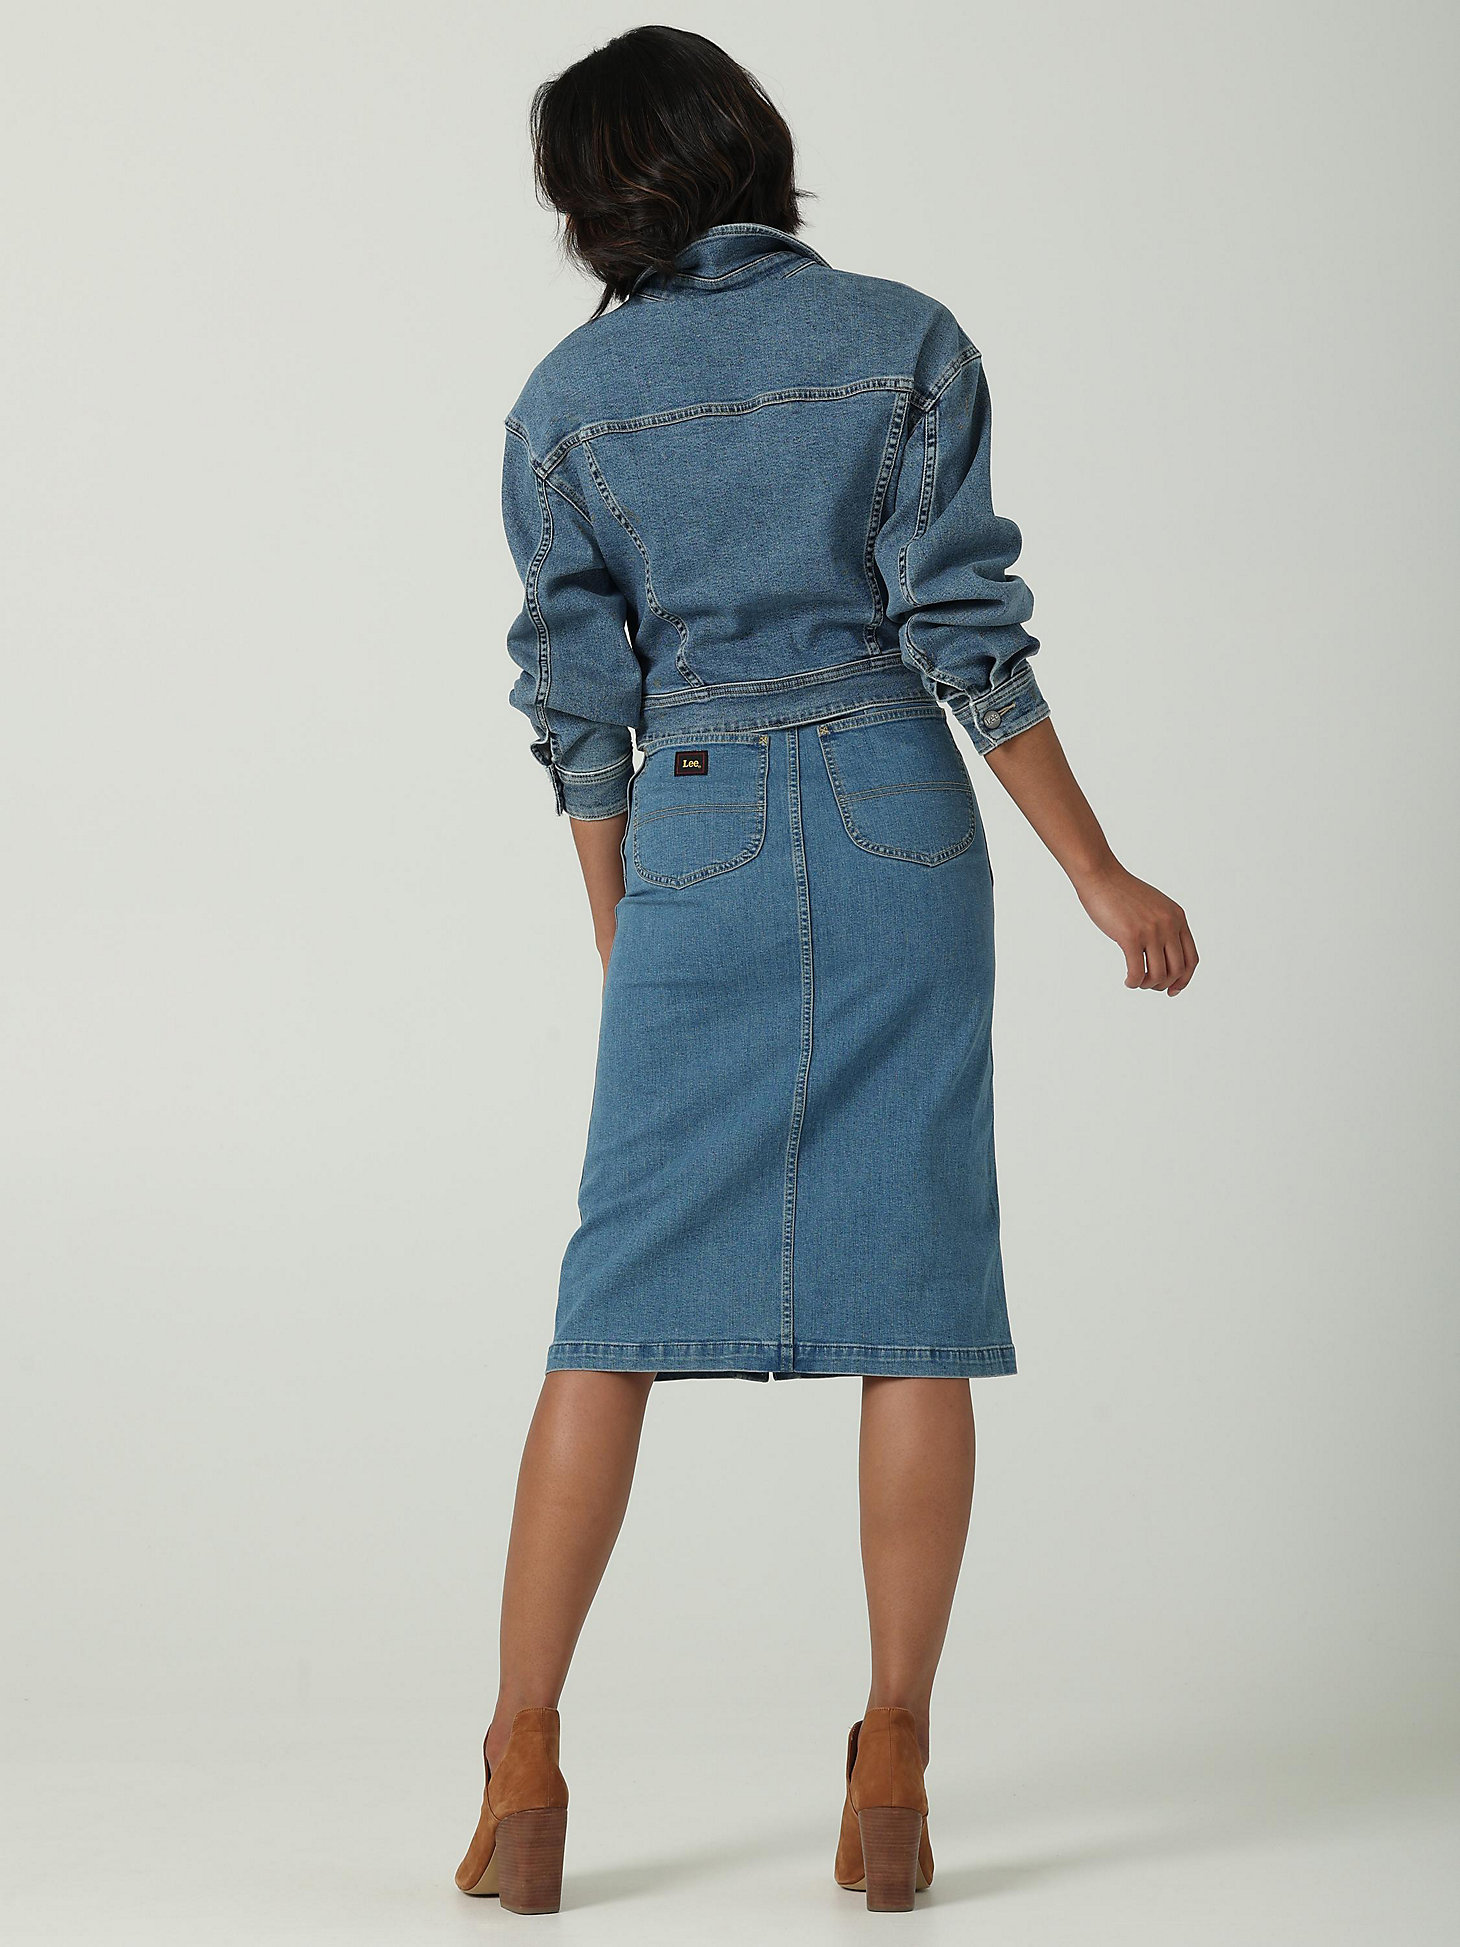 Women's Vintage Modern All Purpose Side Zip Midi Skirt in Chester Stone alternative view 1